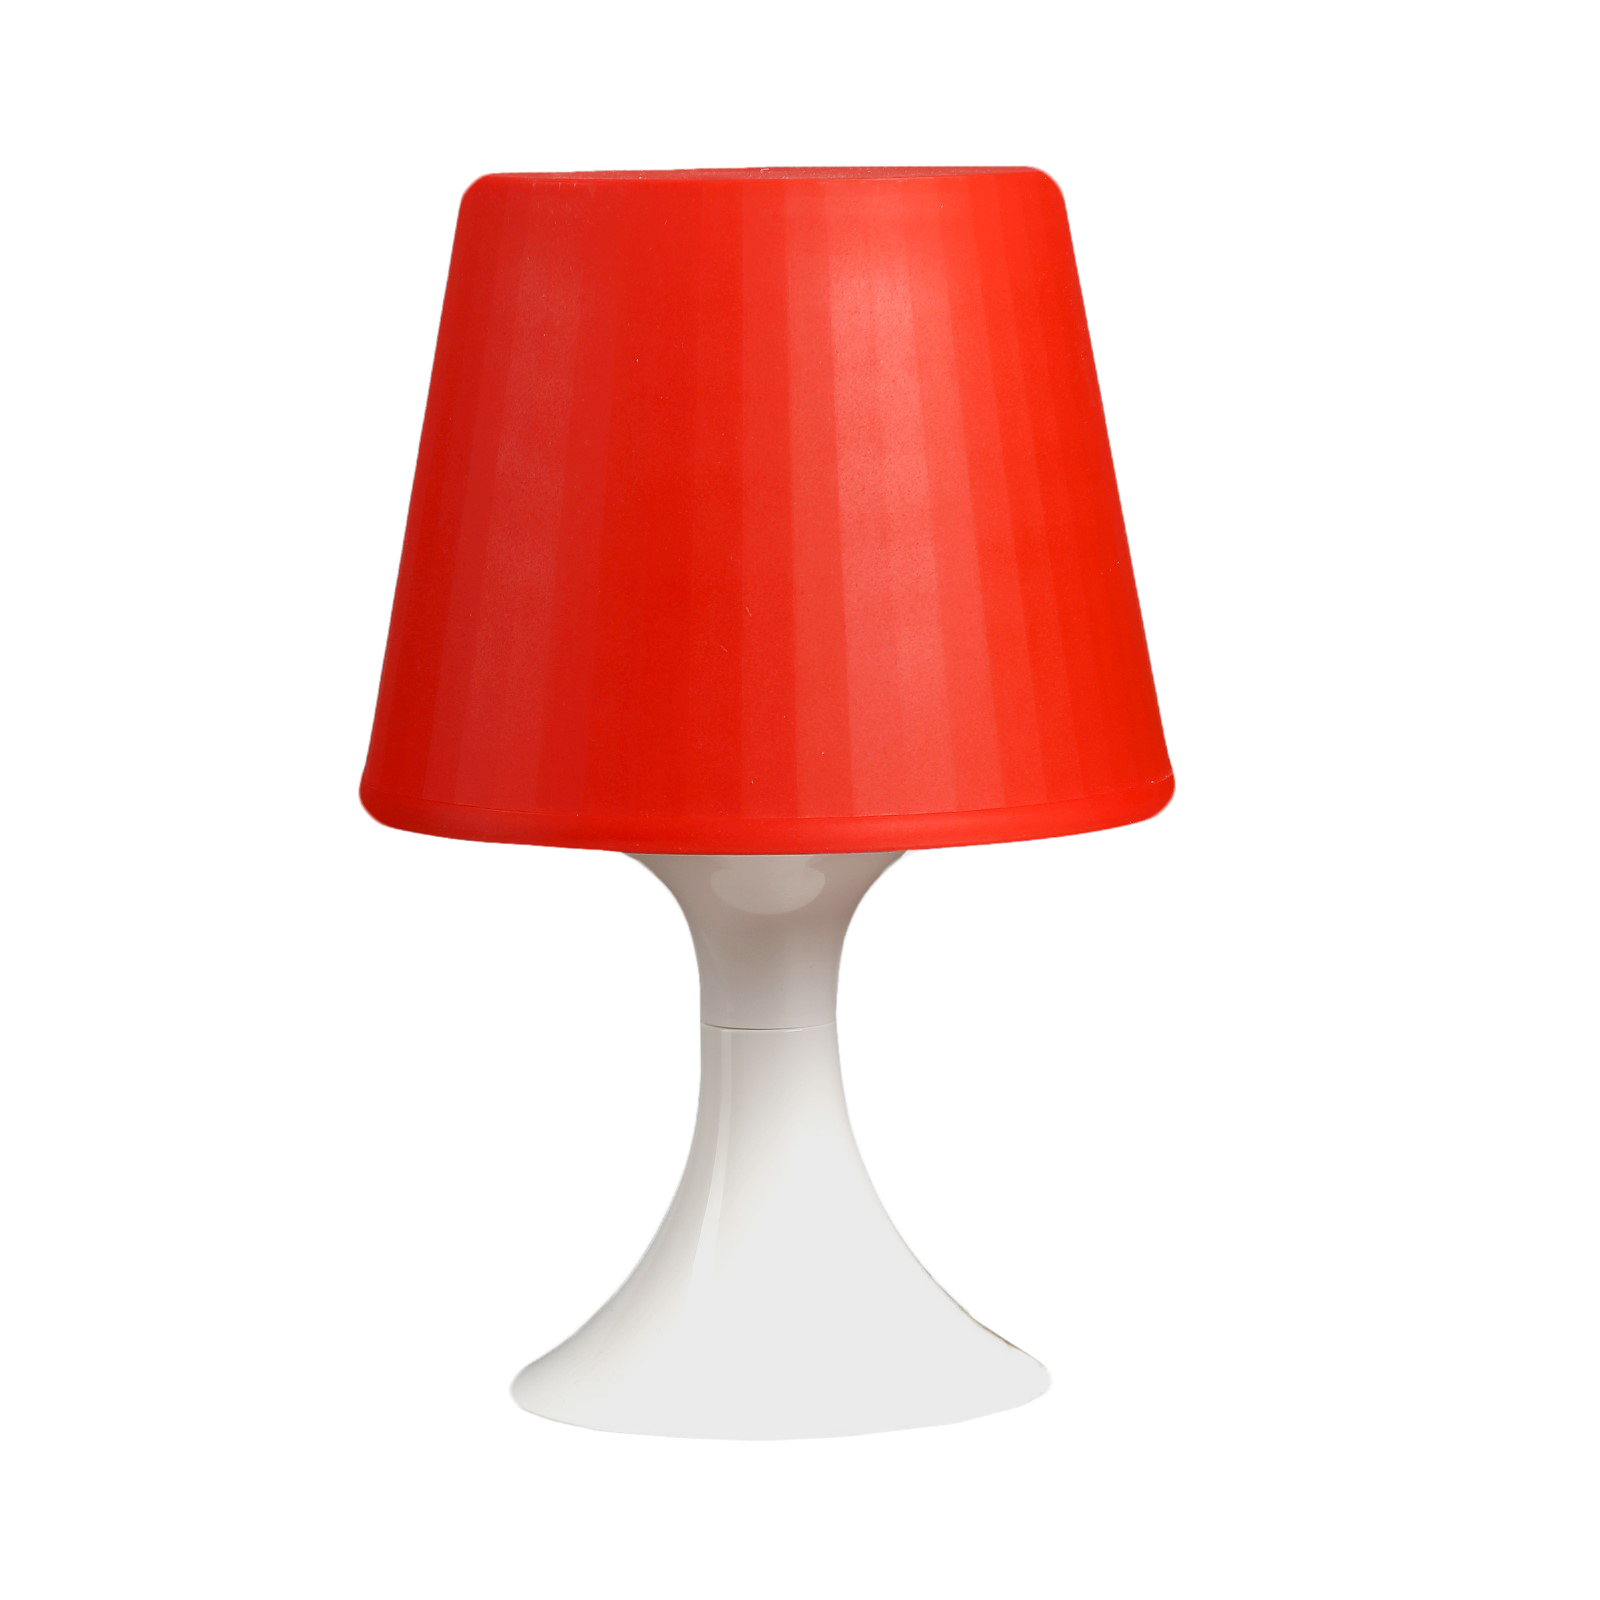 Настольная лампа RISALUX бордовая 19.5 см х 19.5 см х 28 см - фото 1